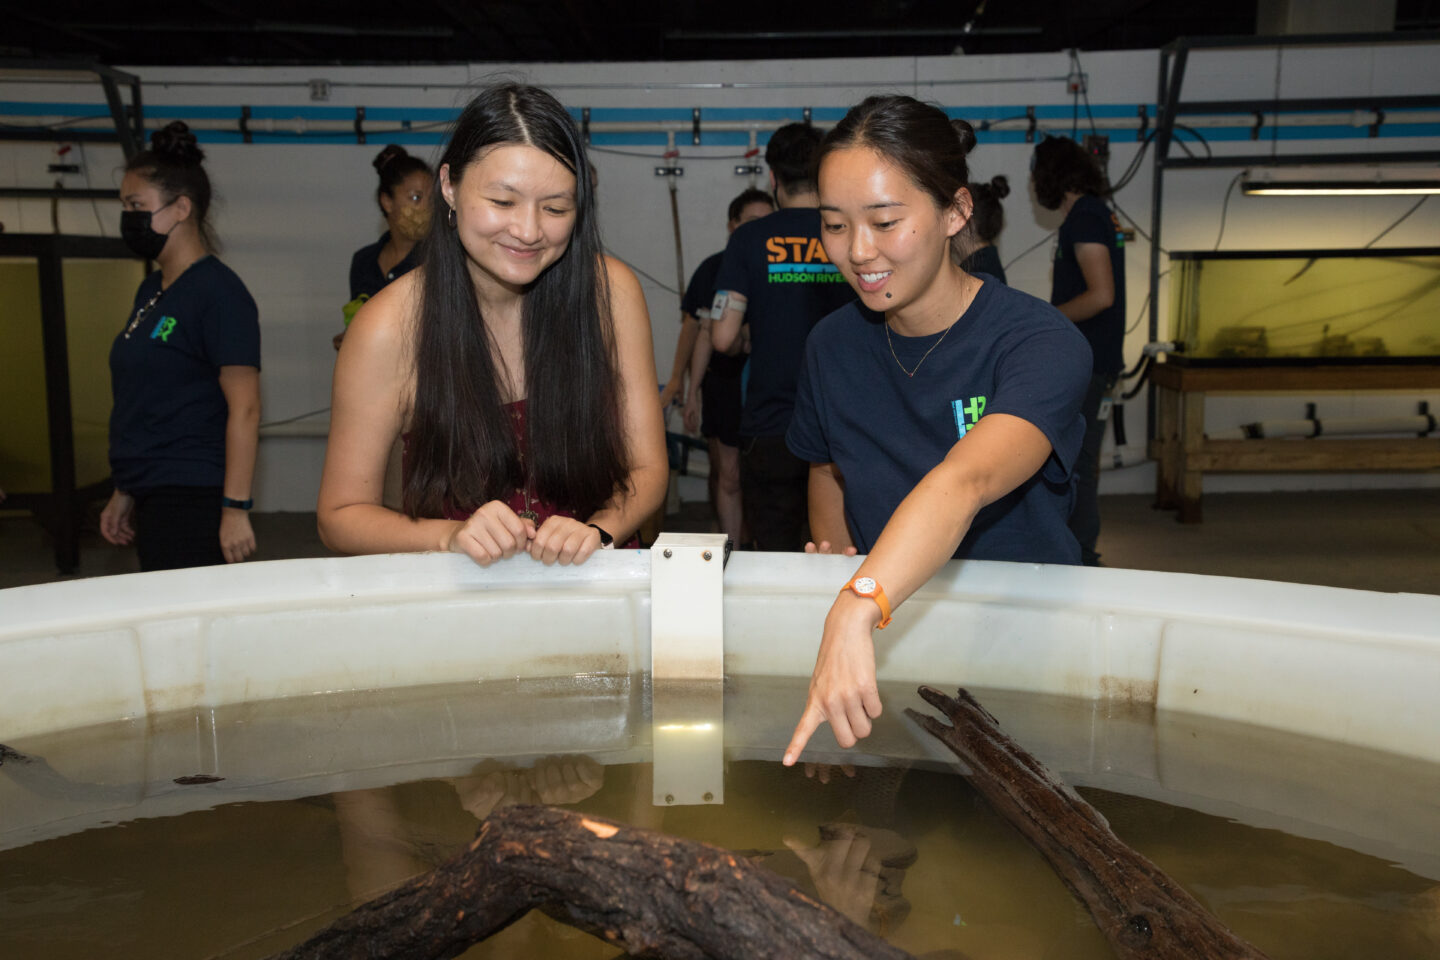 A Hudson River Park River Project staffer teaches a Pier 40 Wetlab visitor about wildlife near an aquarium pool